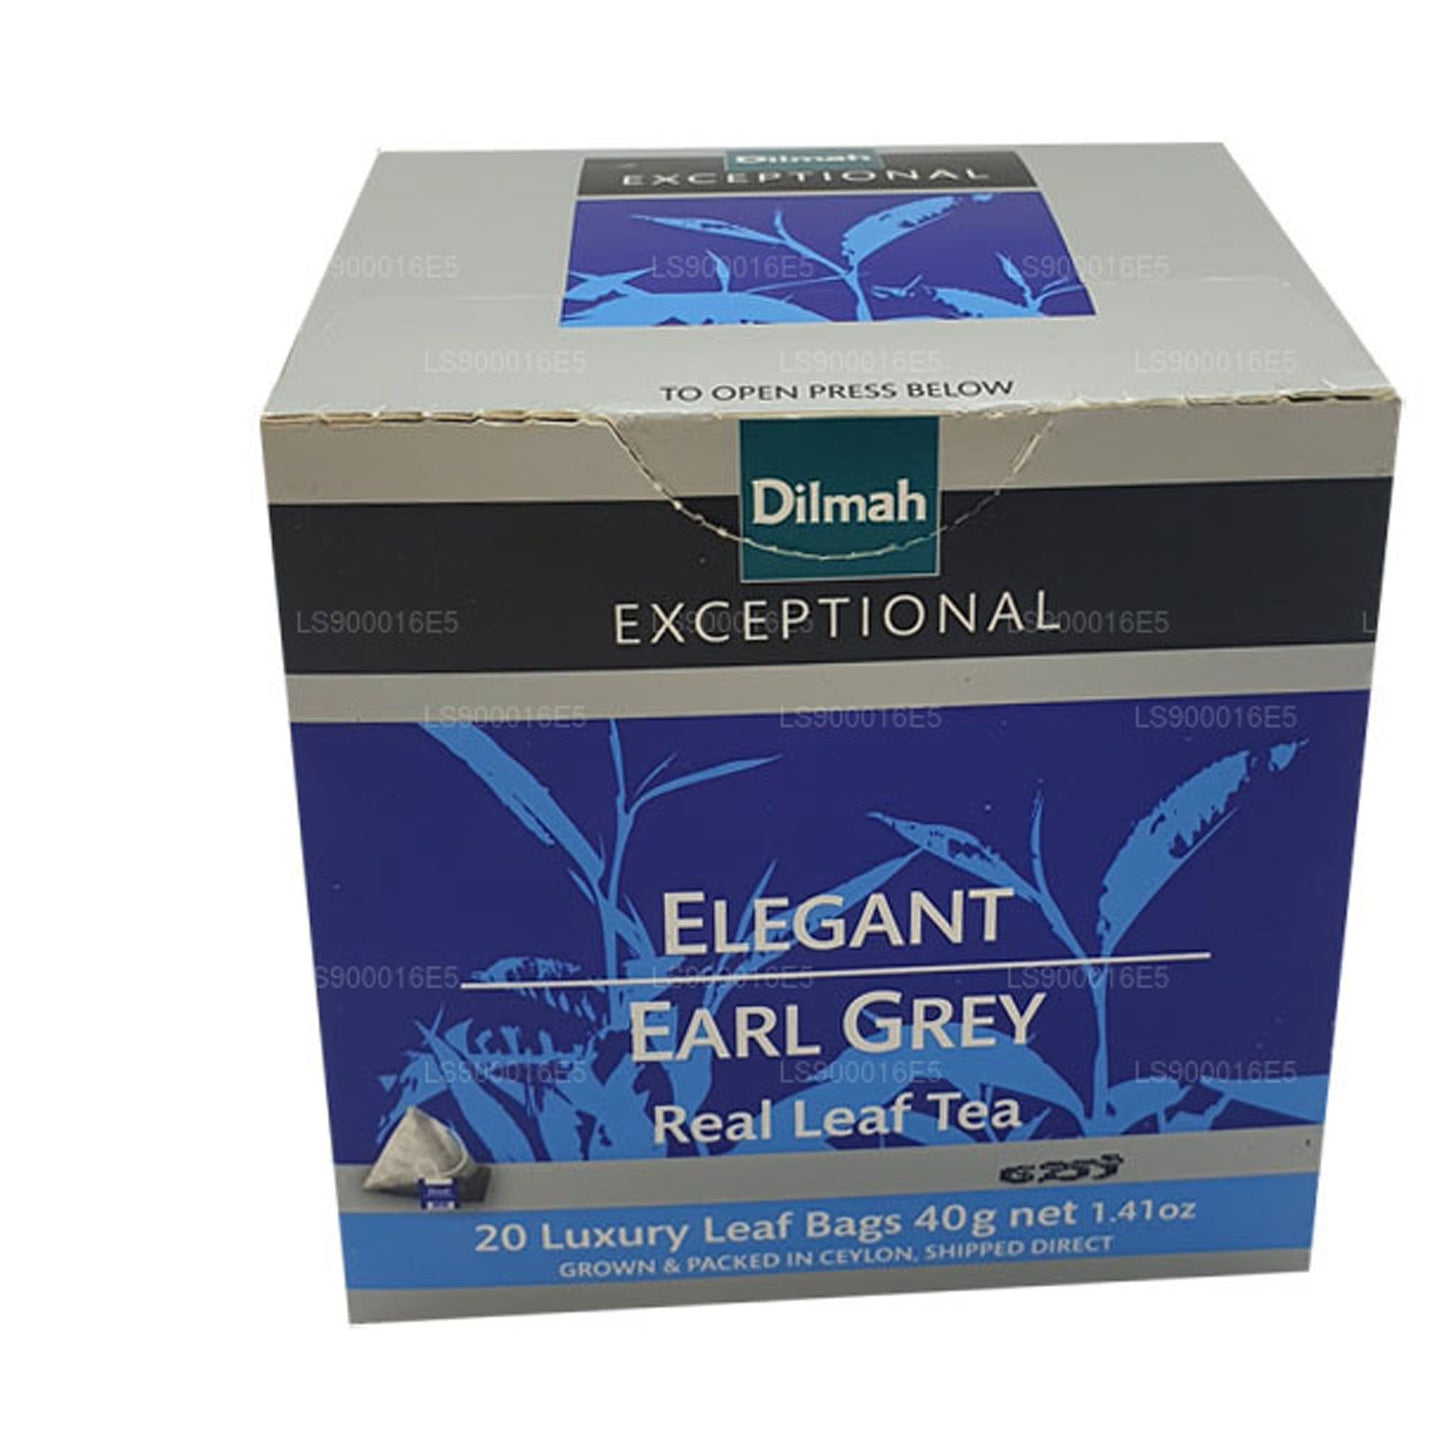 Dilmah uitzonderlijke elegante Earl Grey Real Leaf-thee (40 g) 20 theezakjes